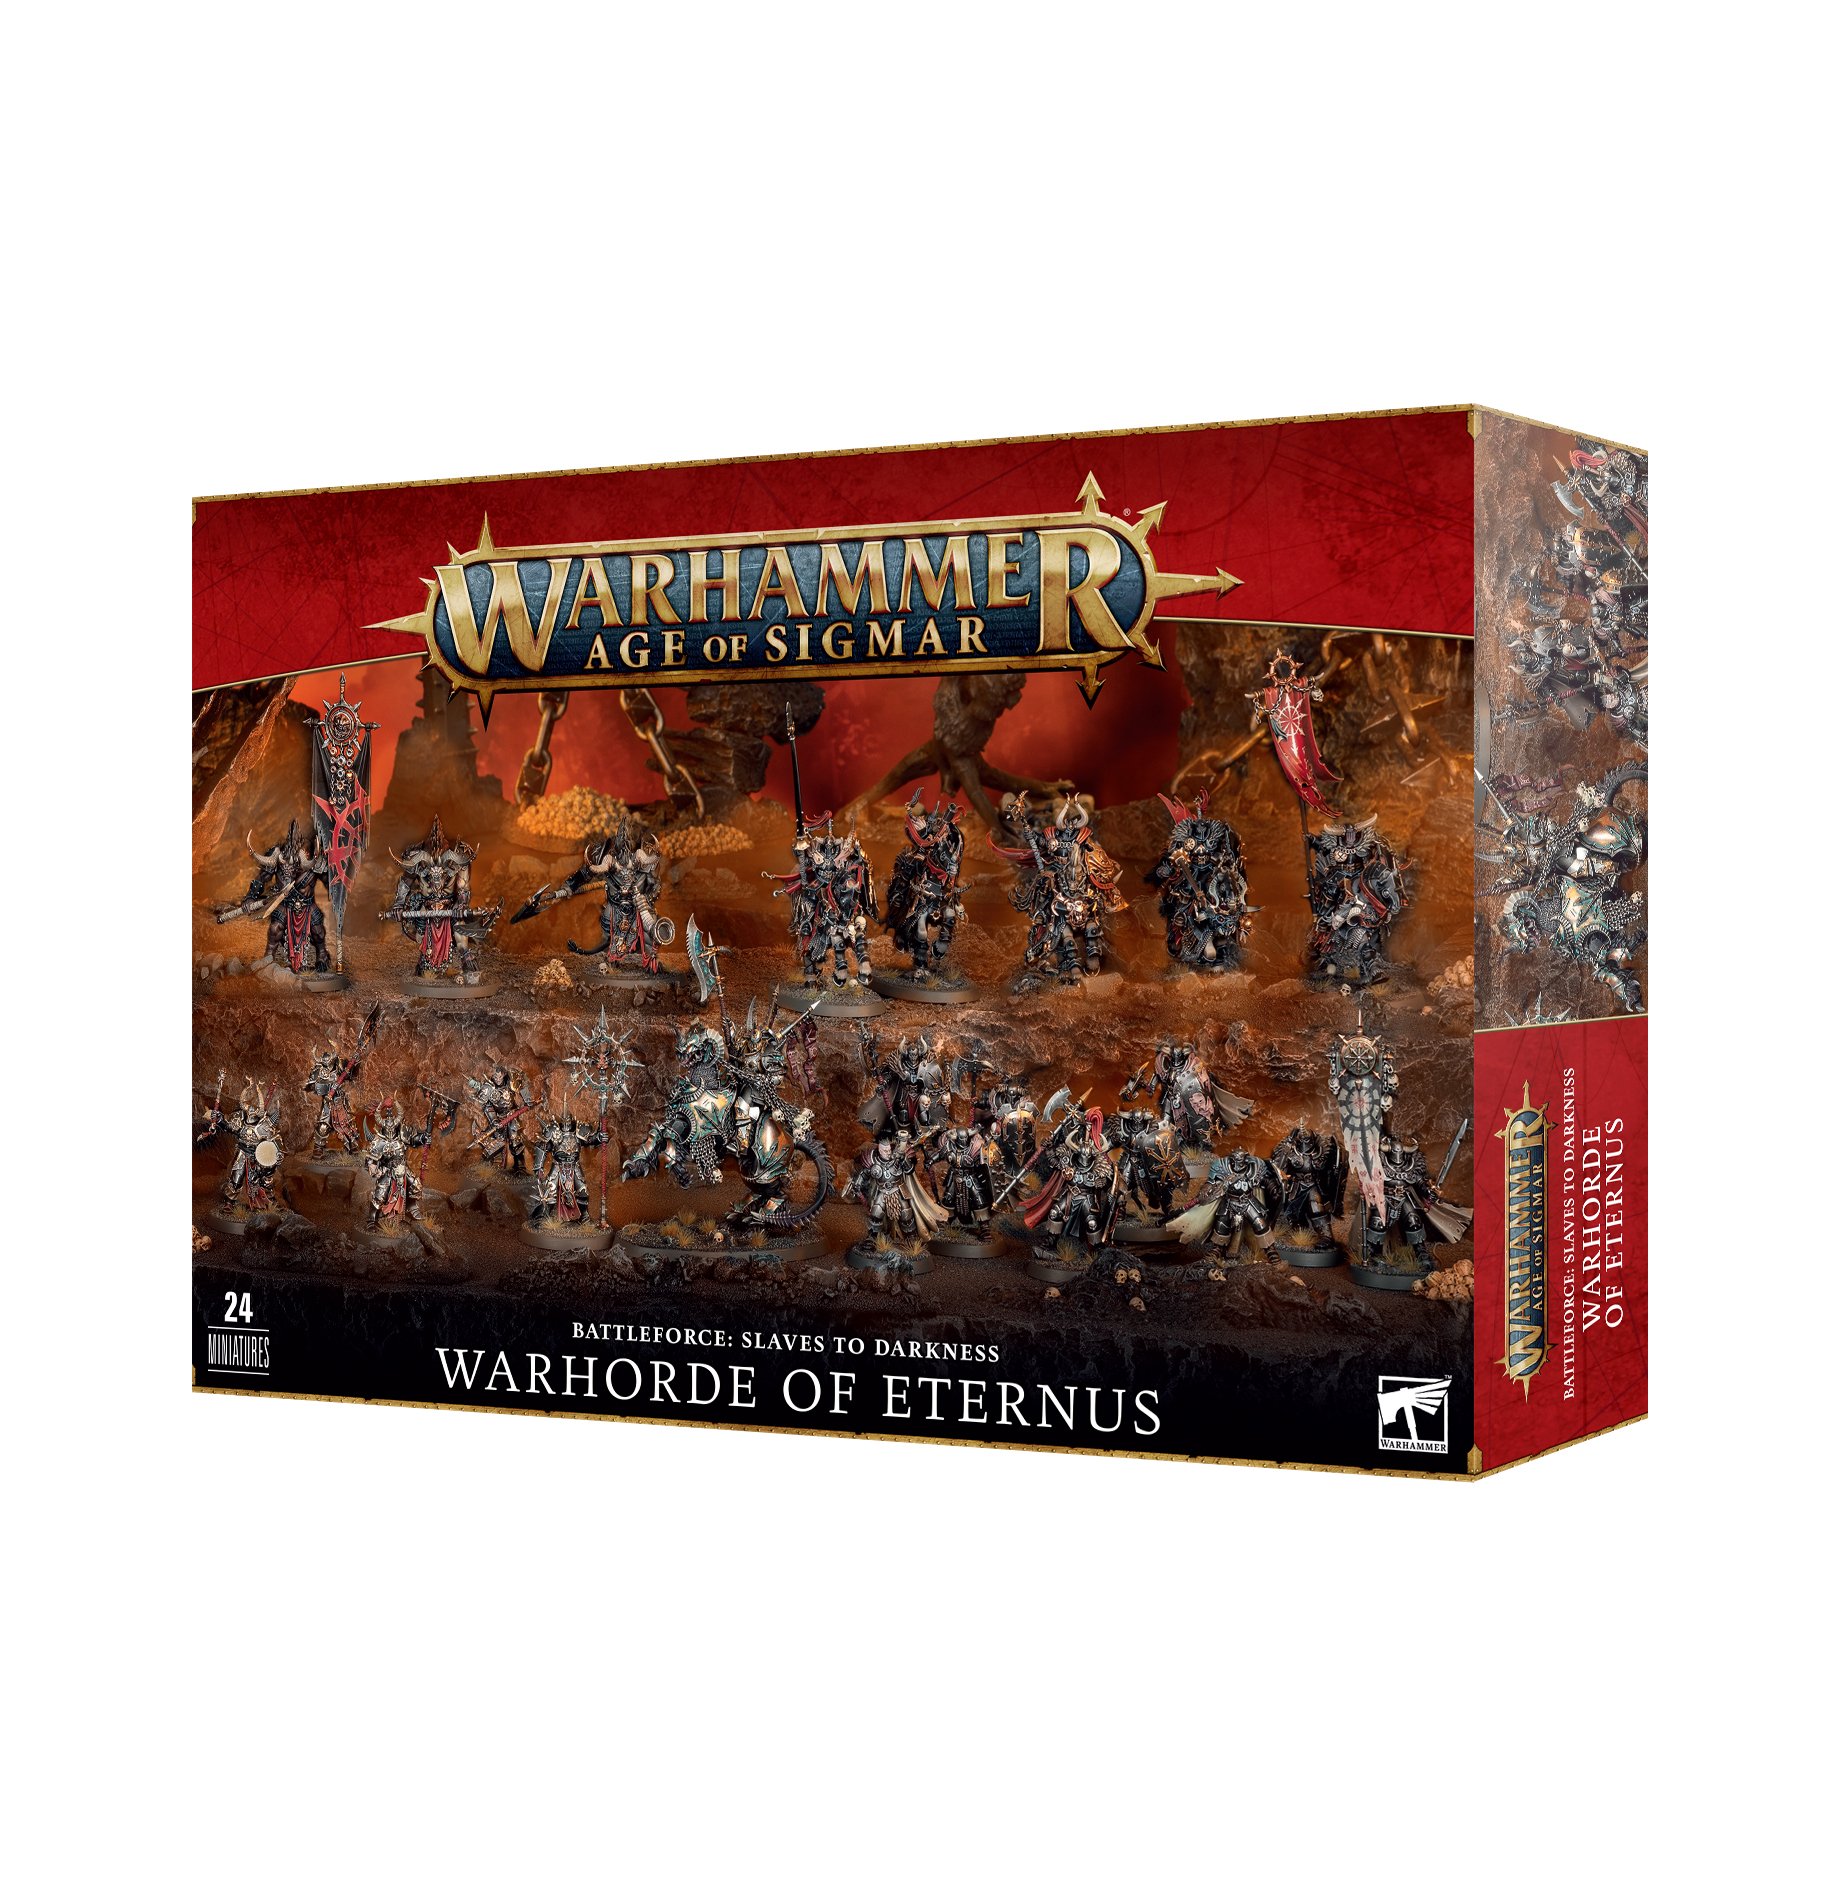 Warhammer Age of Sigmar: Battleforce: Slaves to Darkness Warhorde of Eternus 